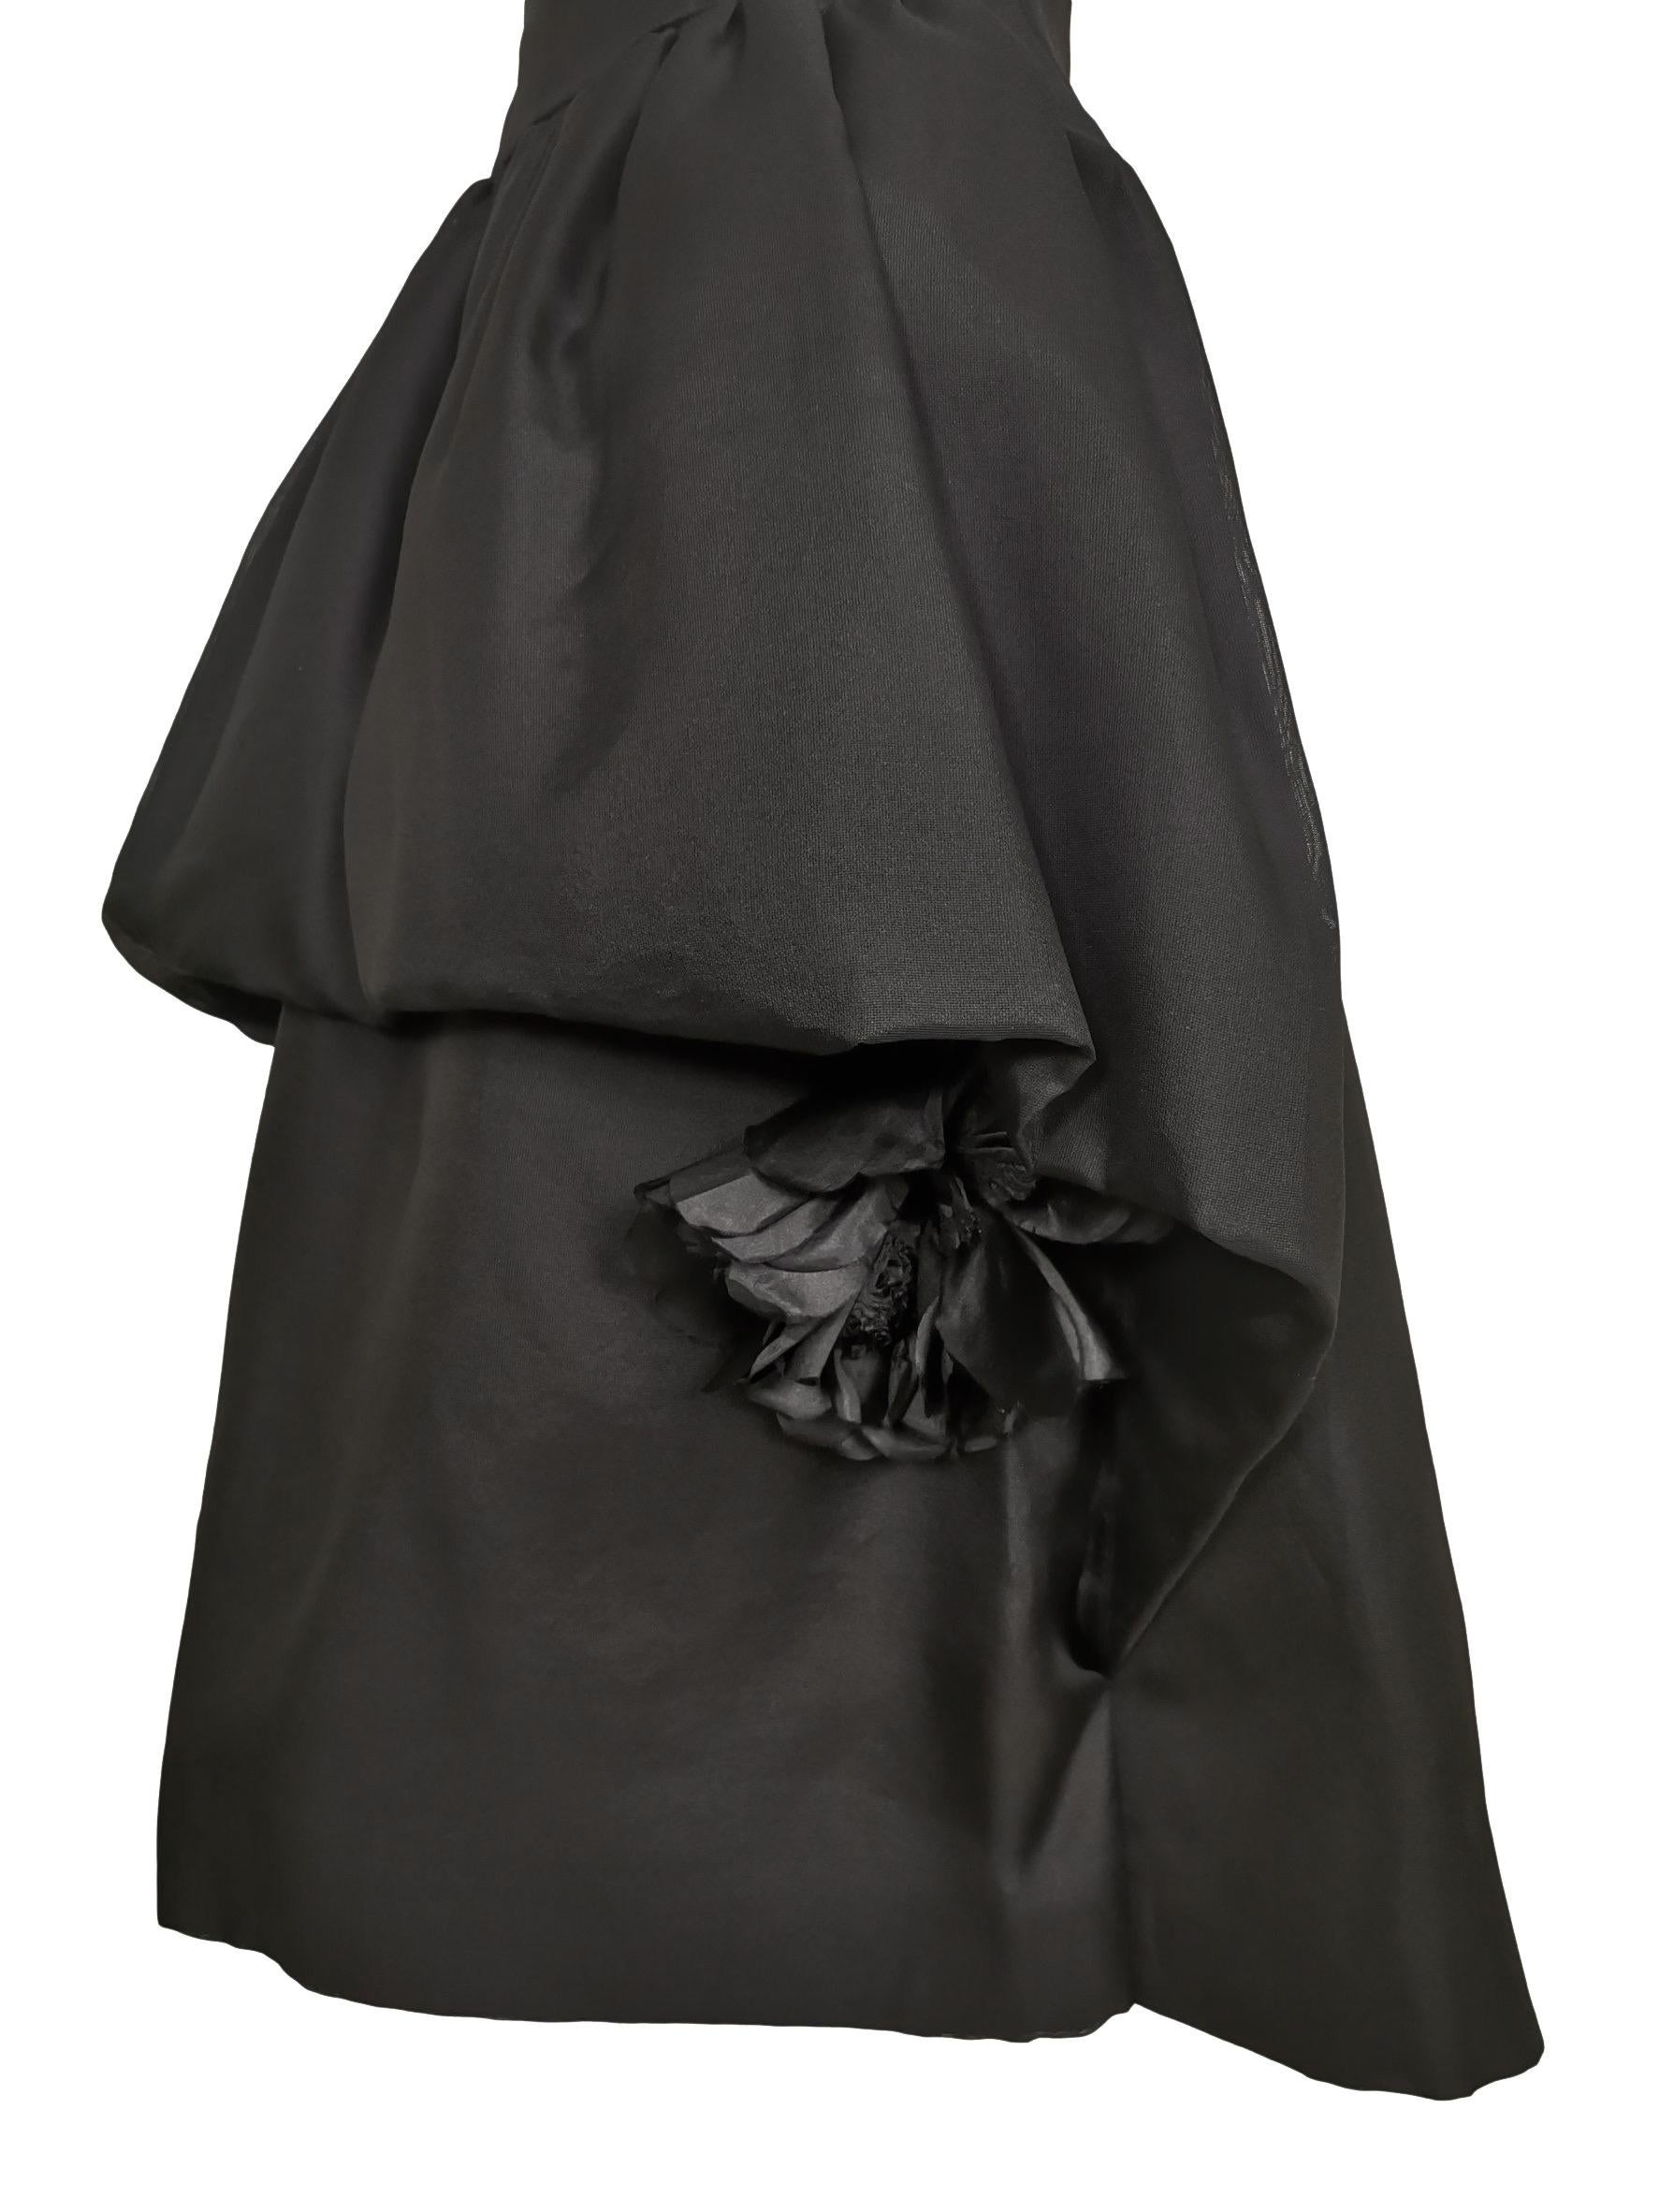 Jacques Heim
Numbered
Silk Gazar Dress
Exclusive to Harrods
Excellent Condition
26 inch Waist